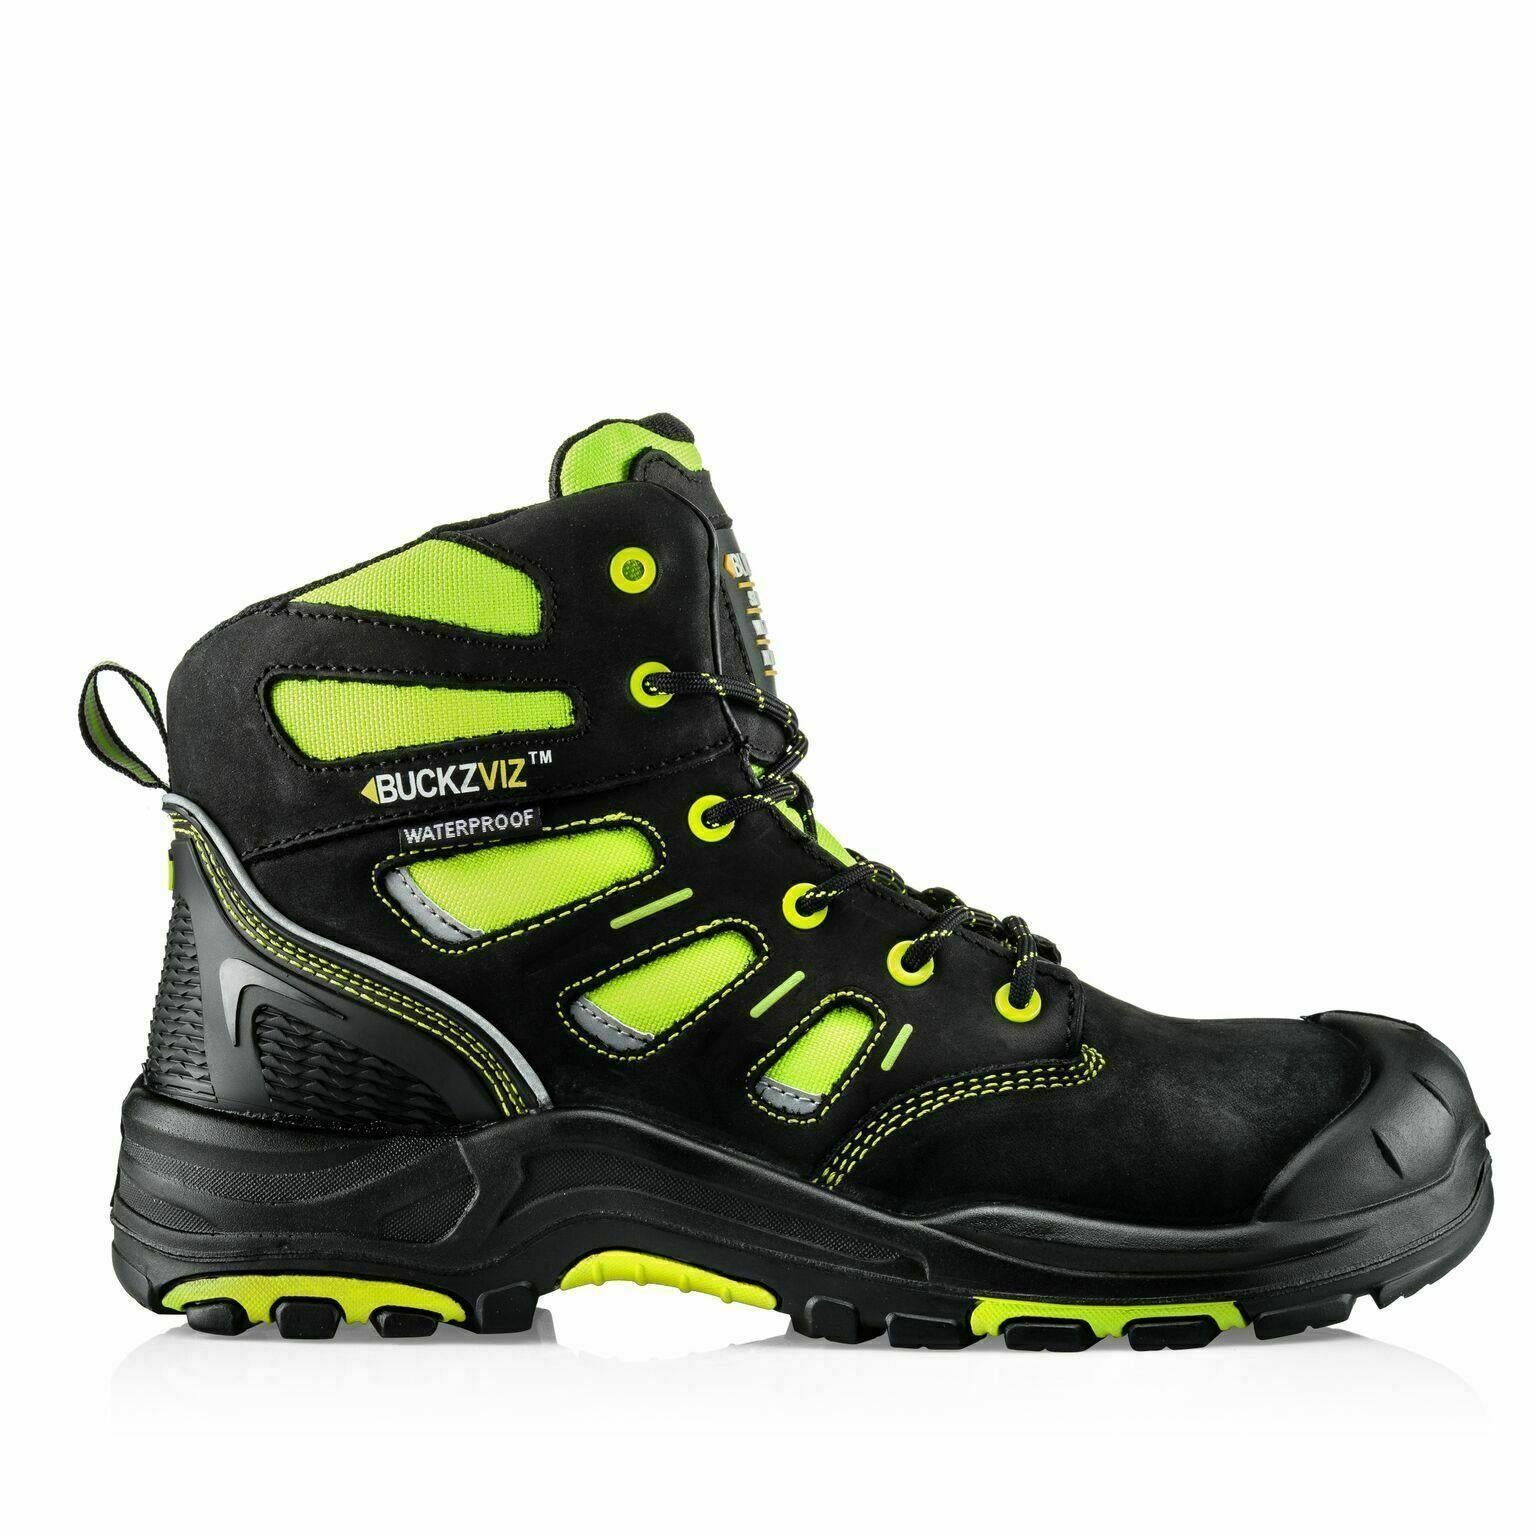 Buckbootz S3 black/yellow composite toe-cap/midsole safety boot #BVIZ2